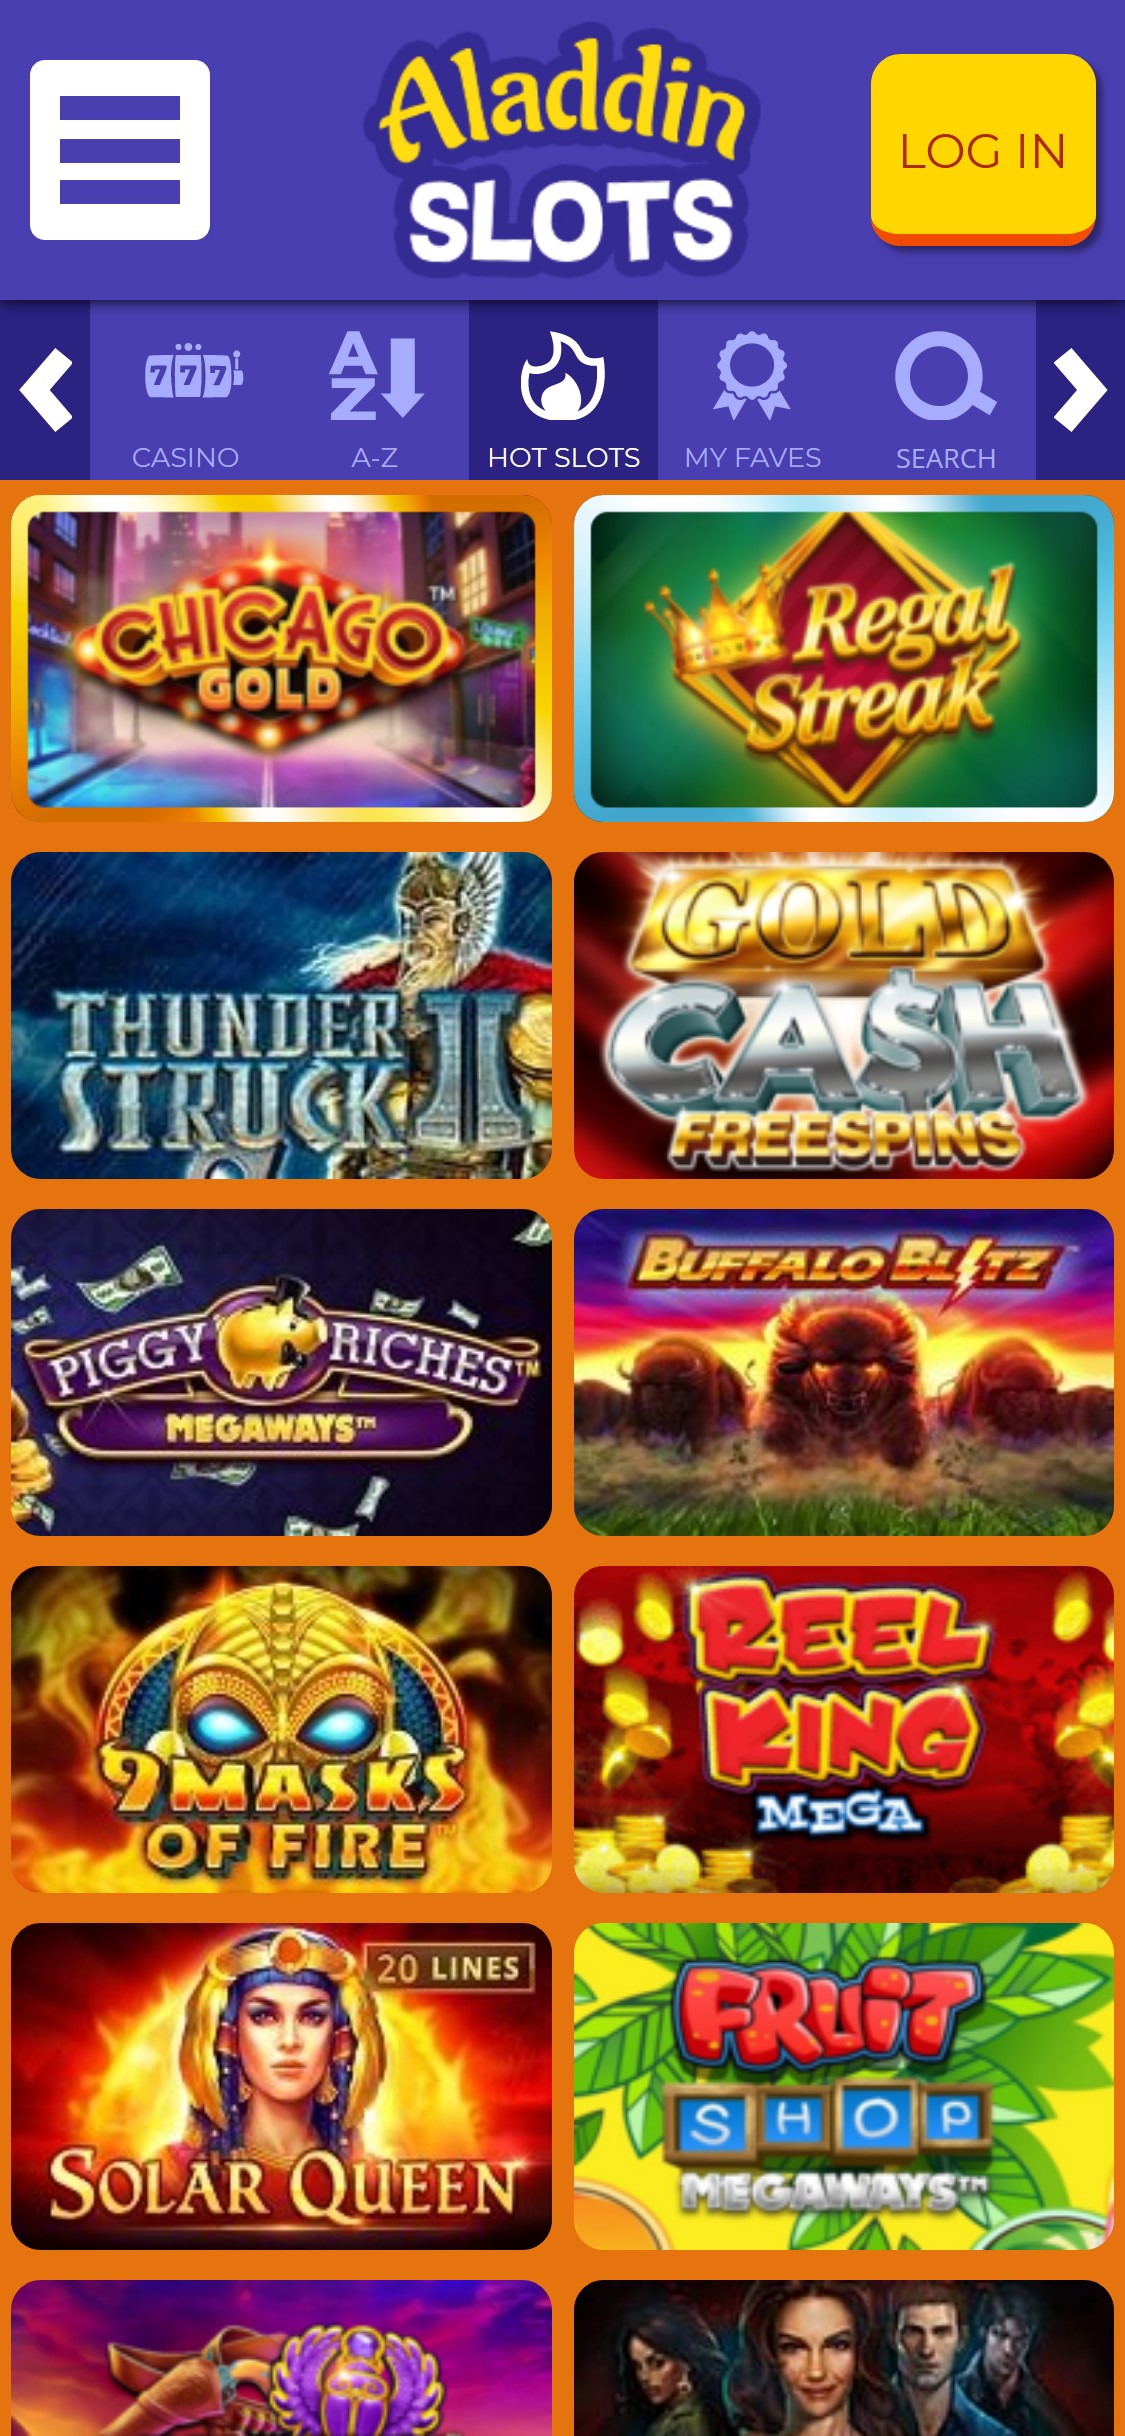 Aladdin Slots Casino Mobile Games Review